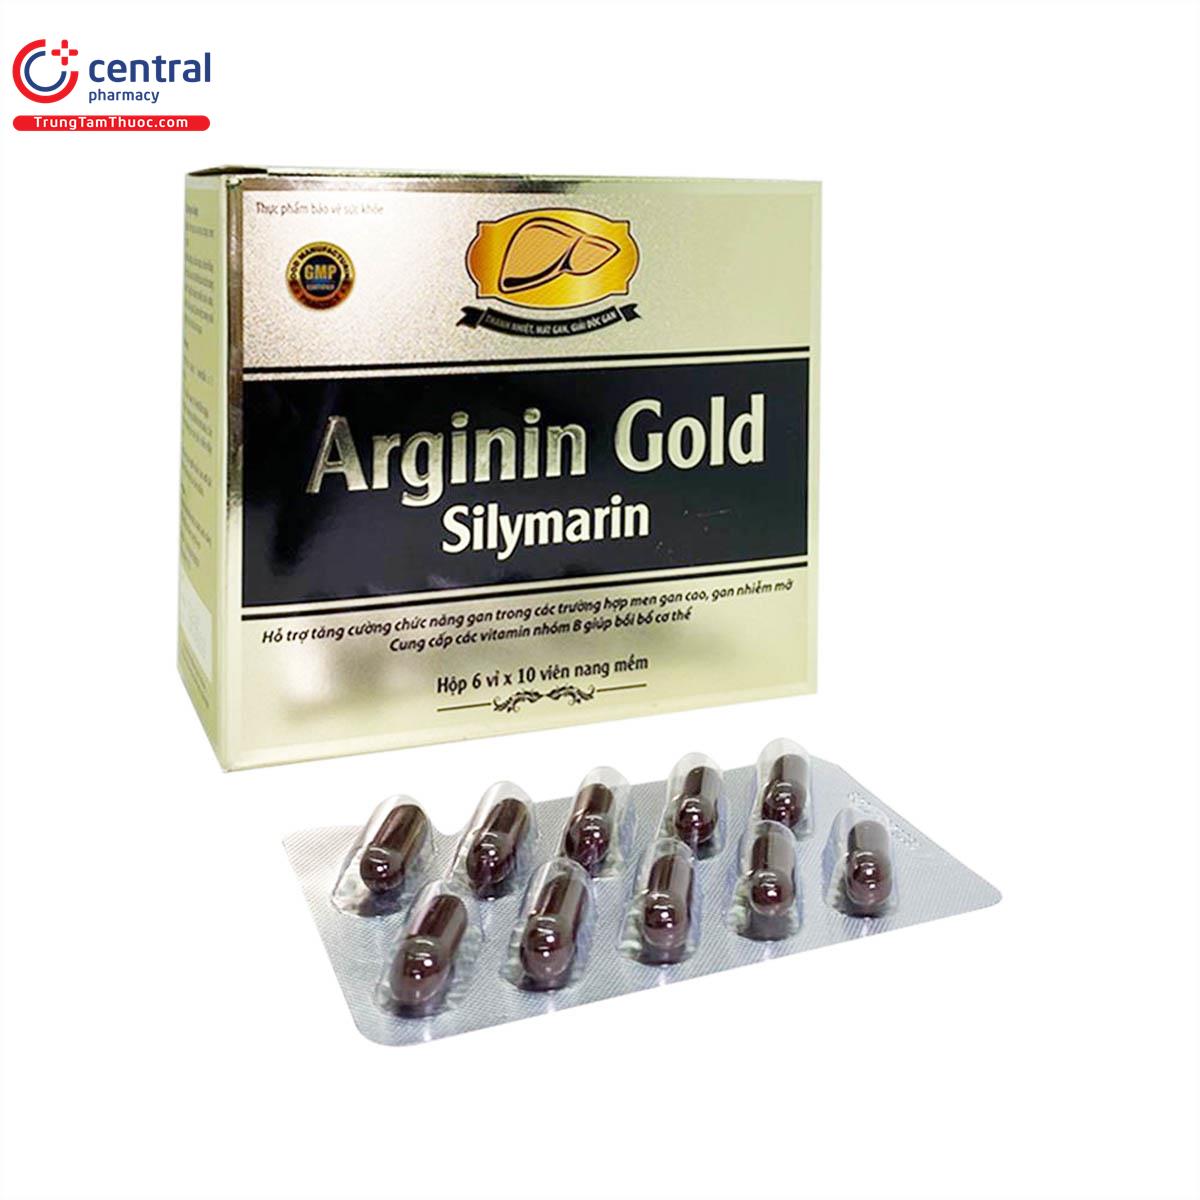 arginin gold silymarin 1 G2827